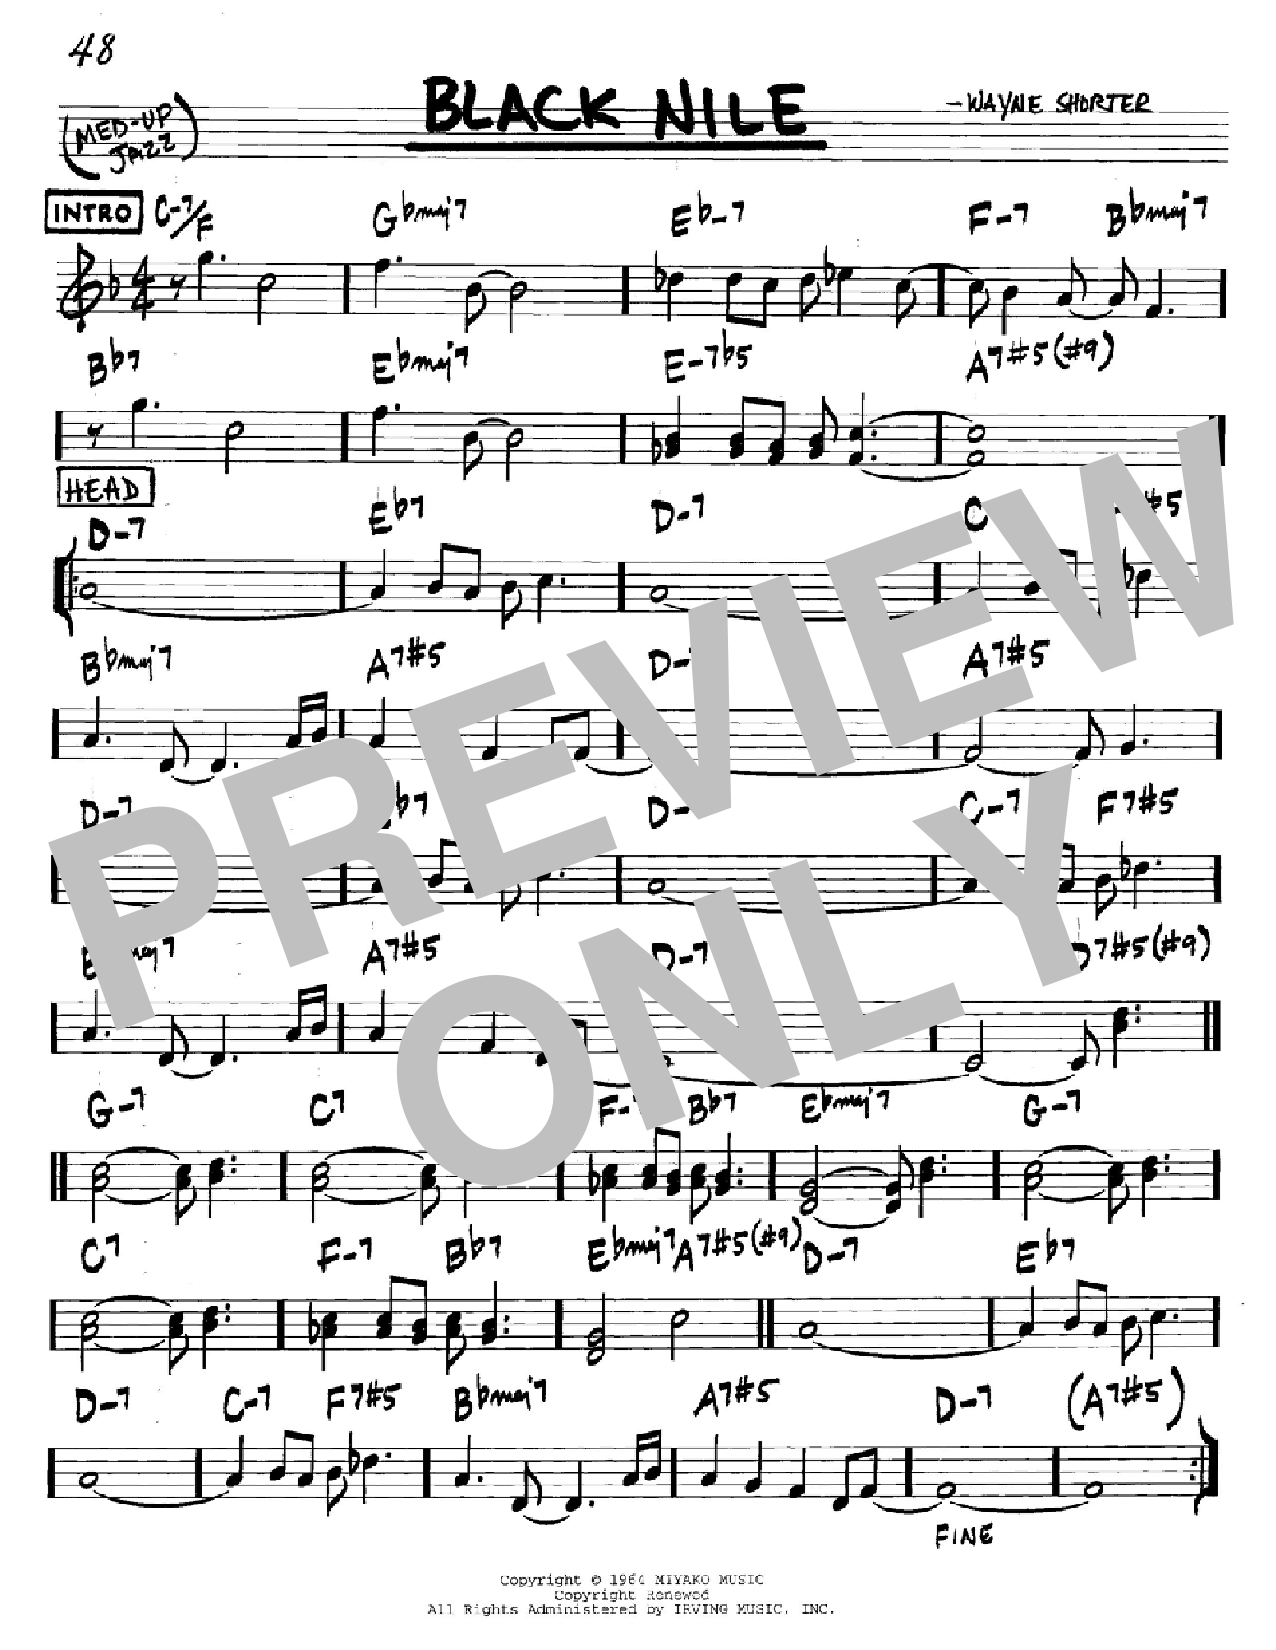 Wayne Shorter Black Nile Sheet Music Notes & Chords for Real Book - Melody & Chords - C Instruments - Download or Print PDF